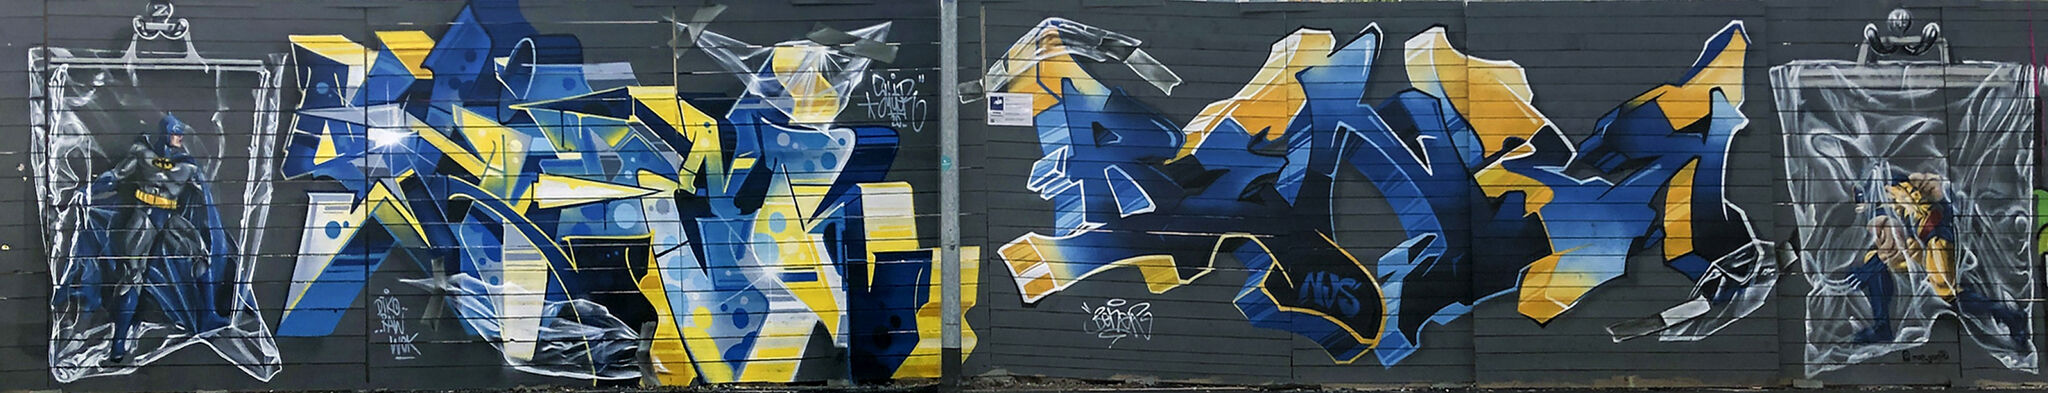 Sliderbandits, moe_graffiti, Zetor One, BeNeR1&mdash;Untitled